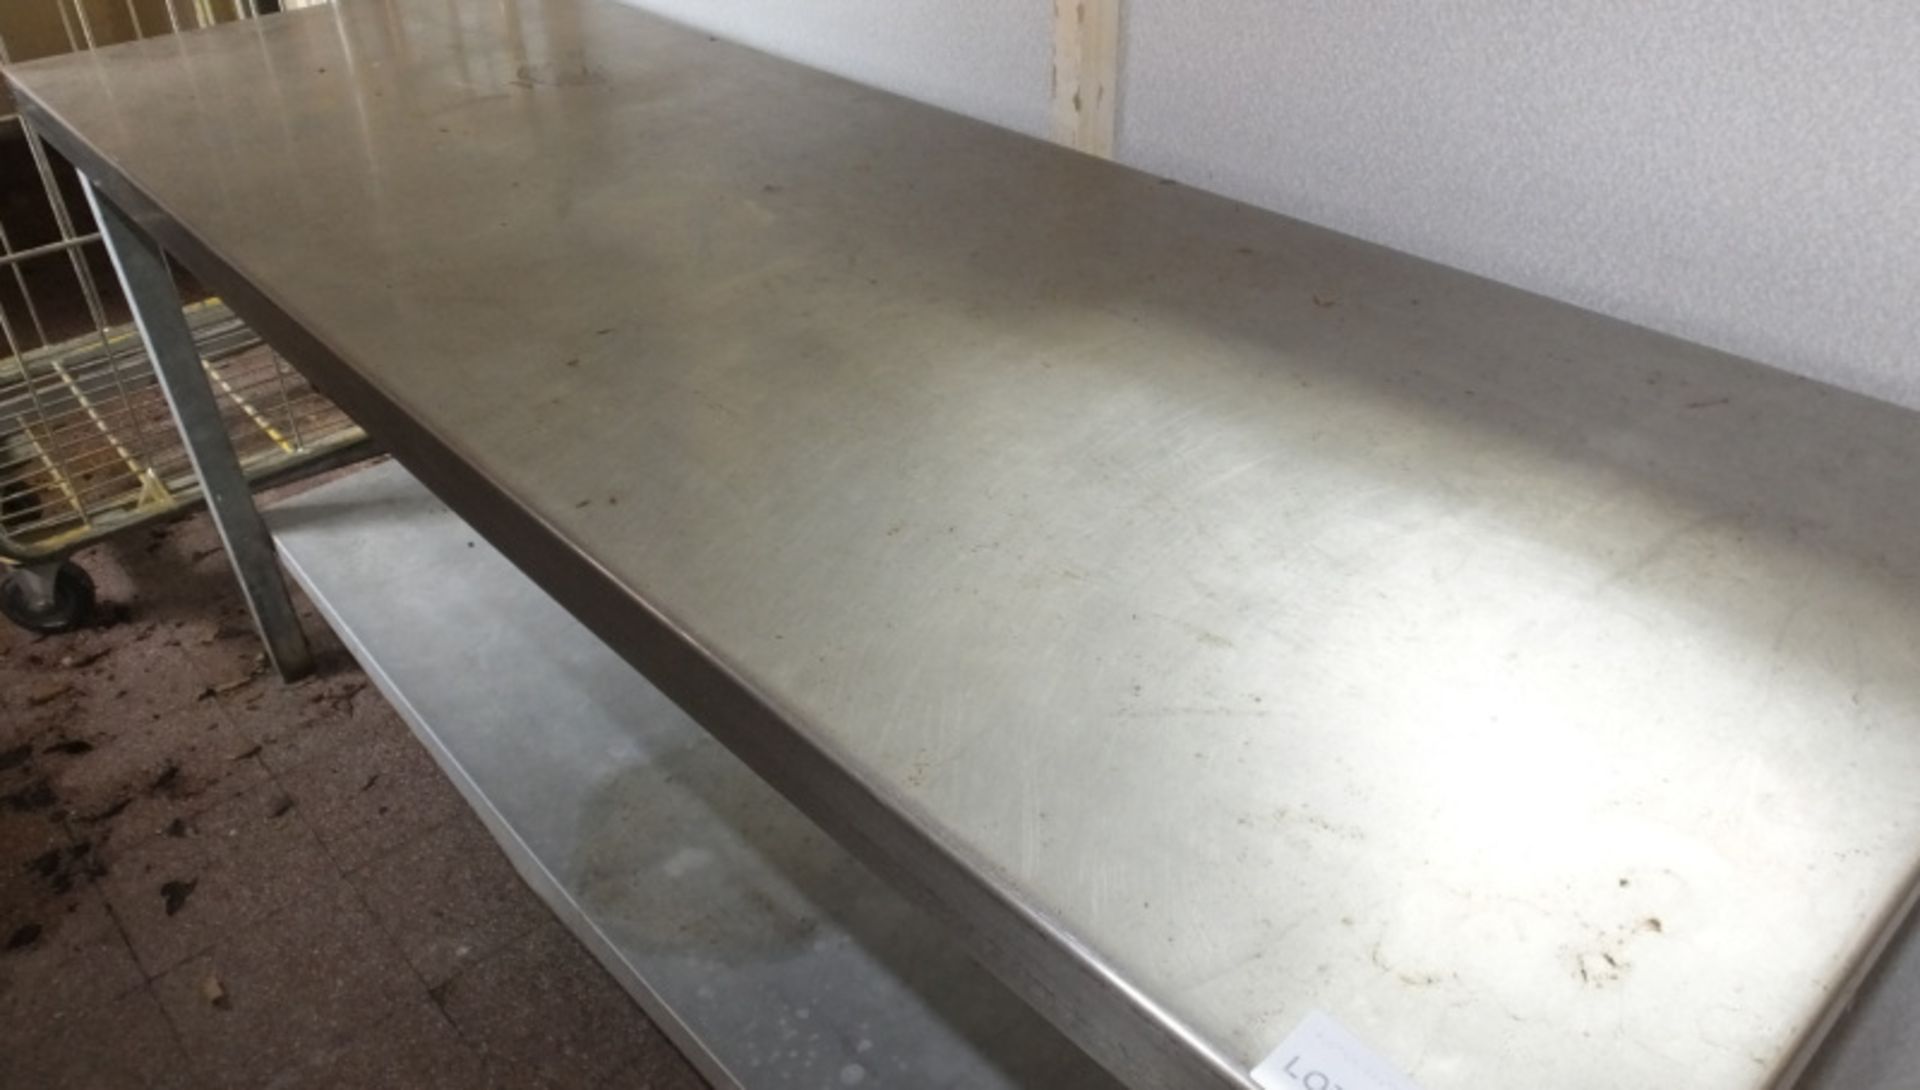 Benham Stainless Steel Prep Table - L1830 x D610 x H850mm (damage to bottom shelf) - Image 2 of 4